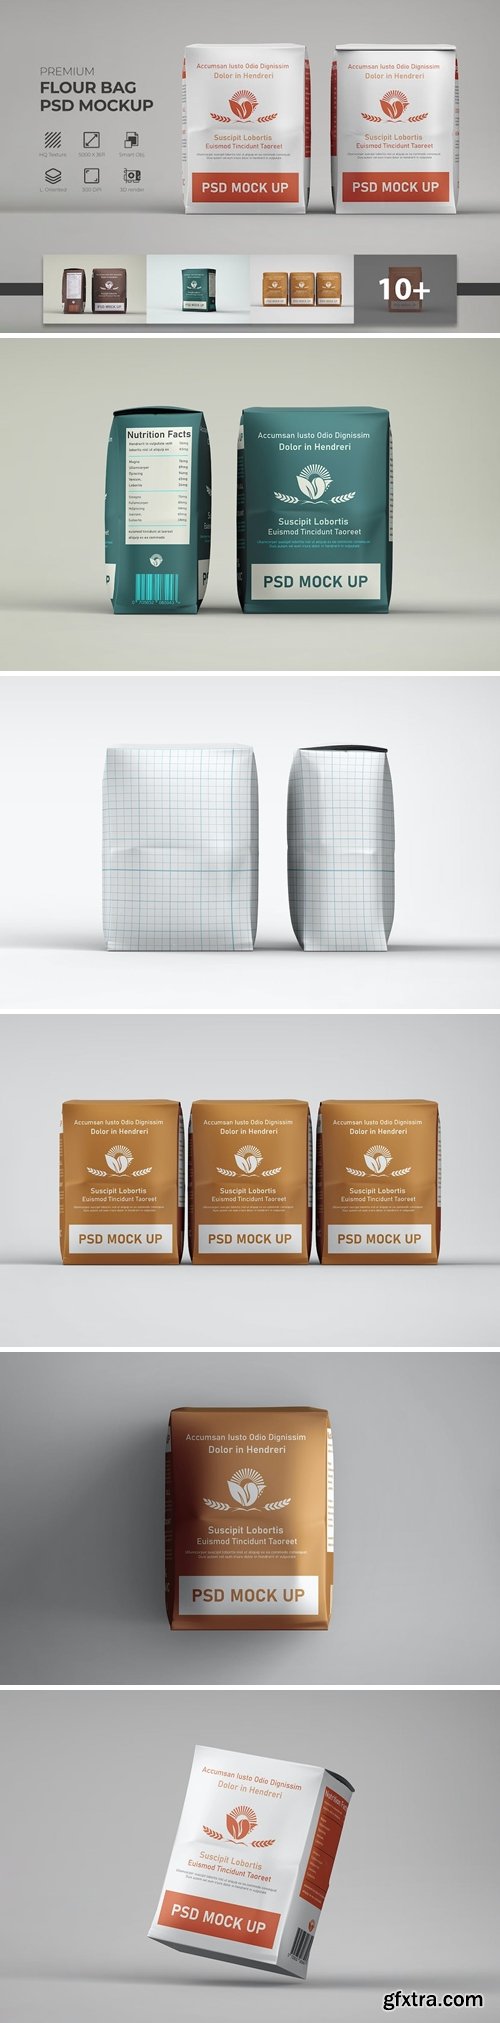 Flour Bag Packaging Mockup V3TQ3AX